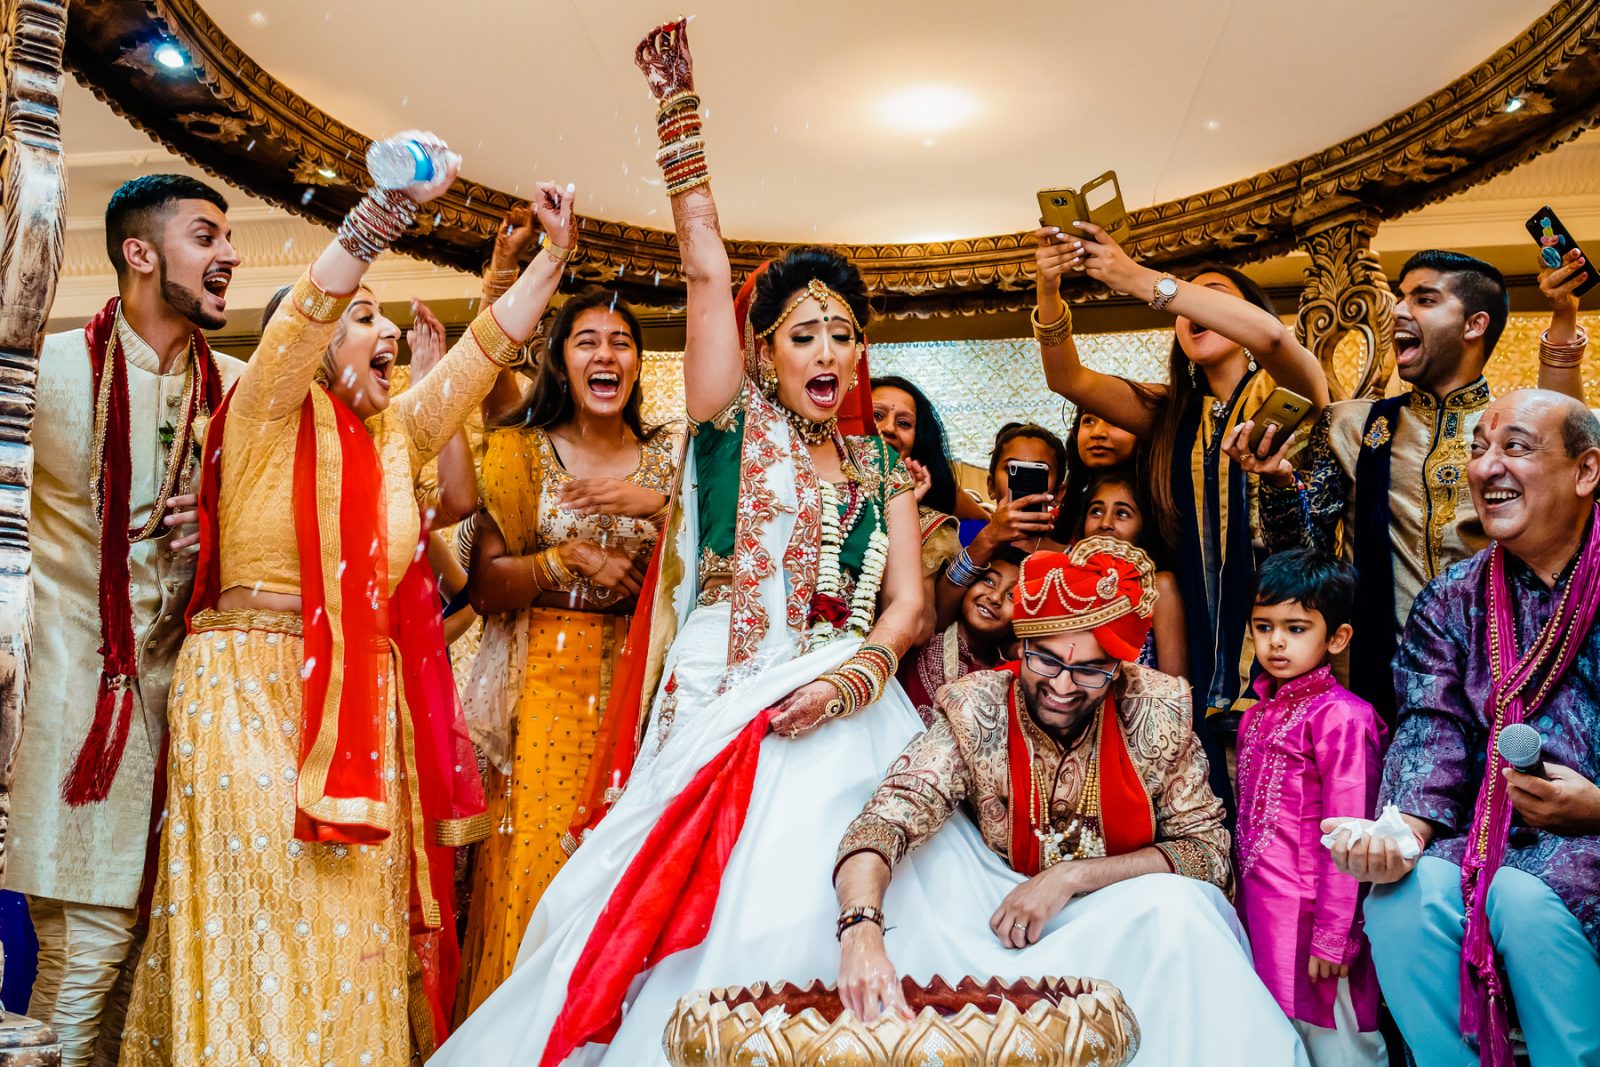 Indian Bride and Groom at wedding celebrating 